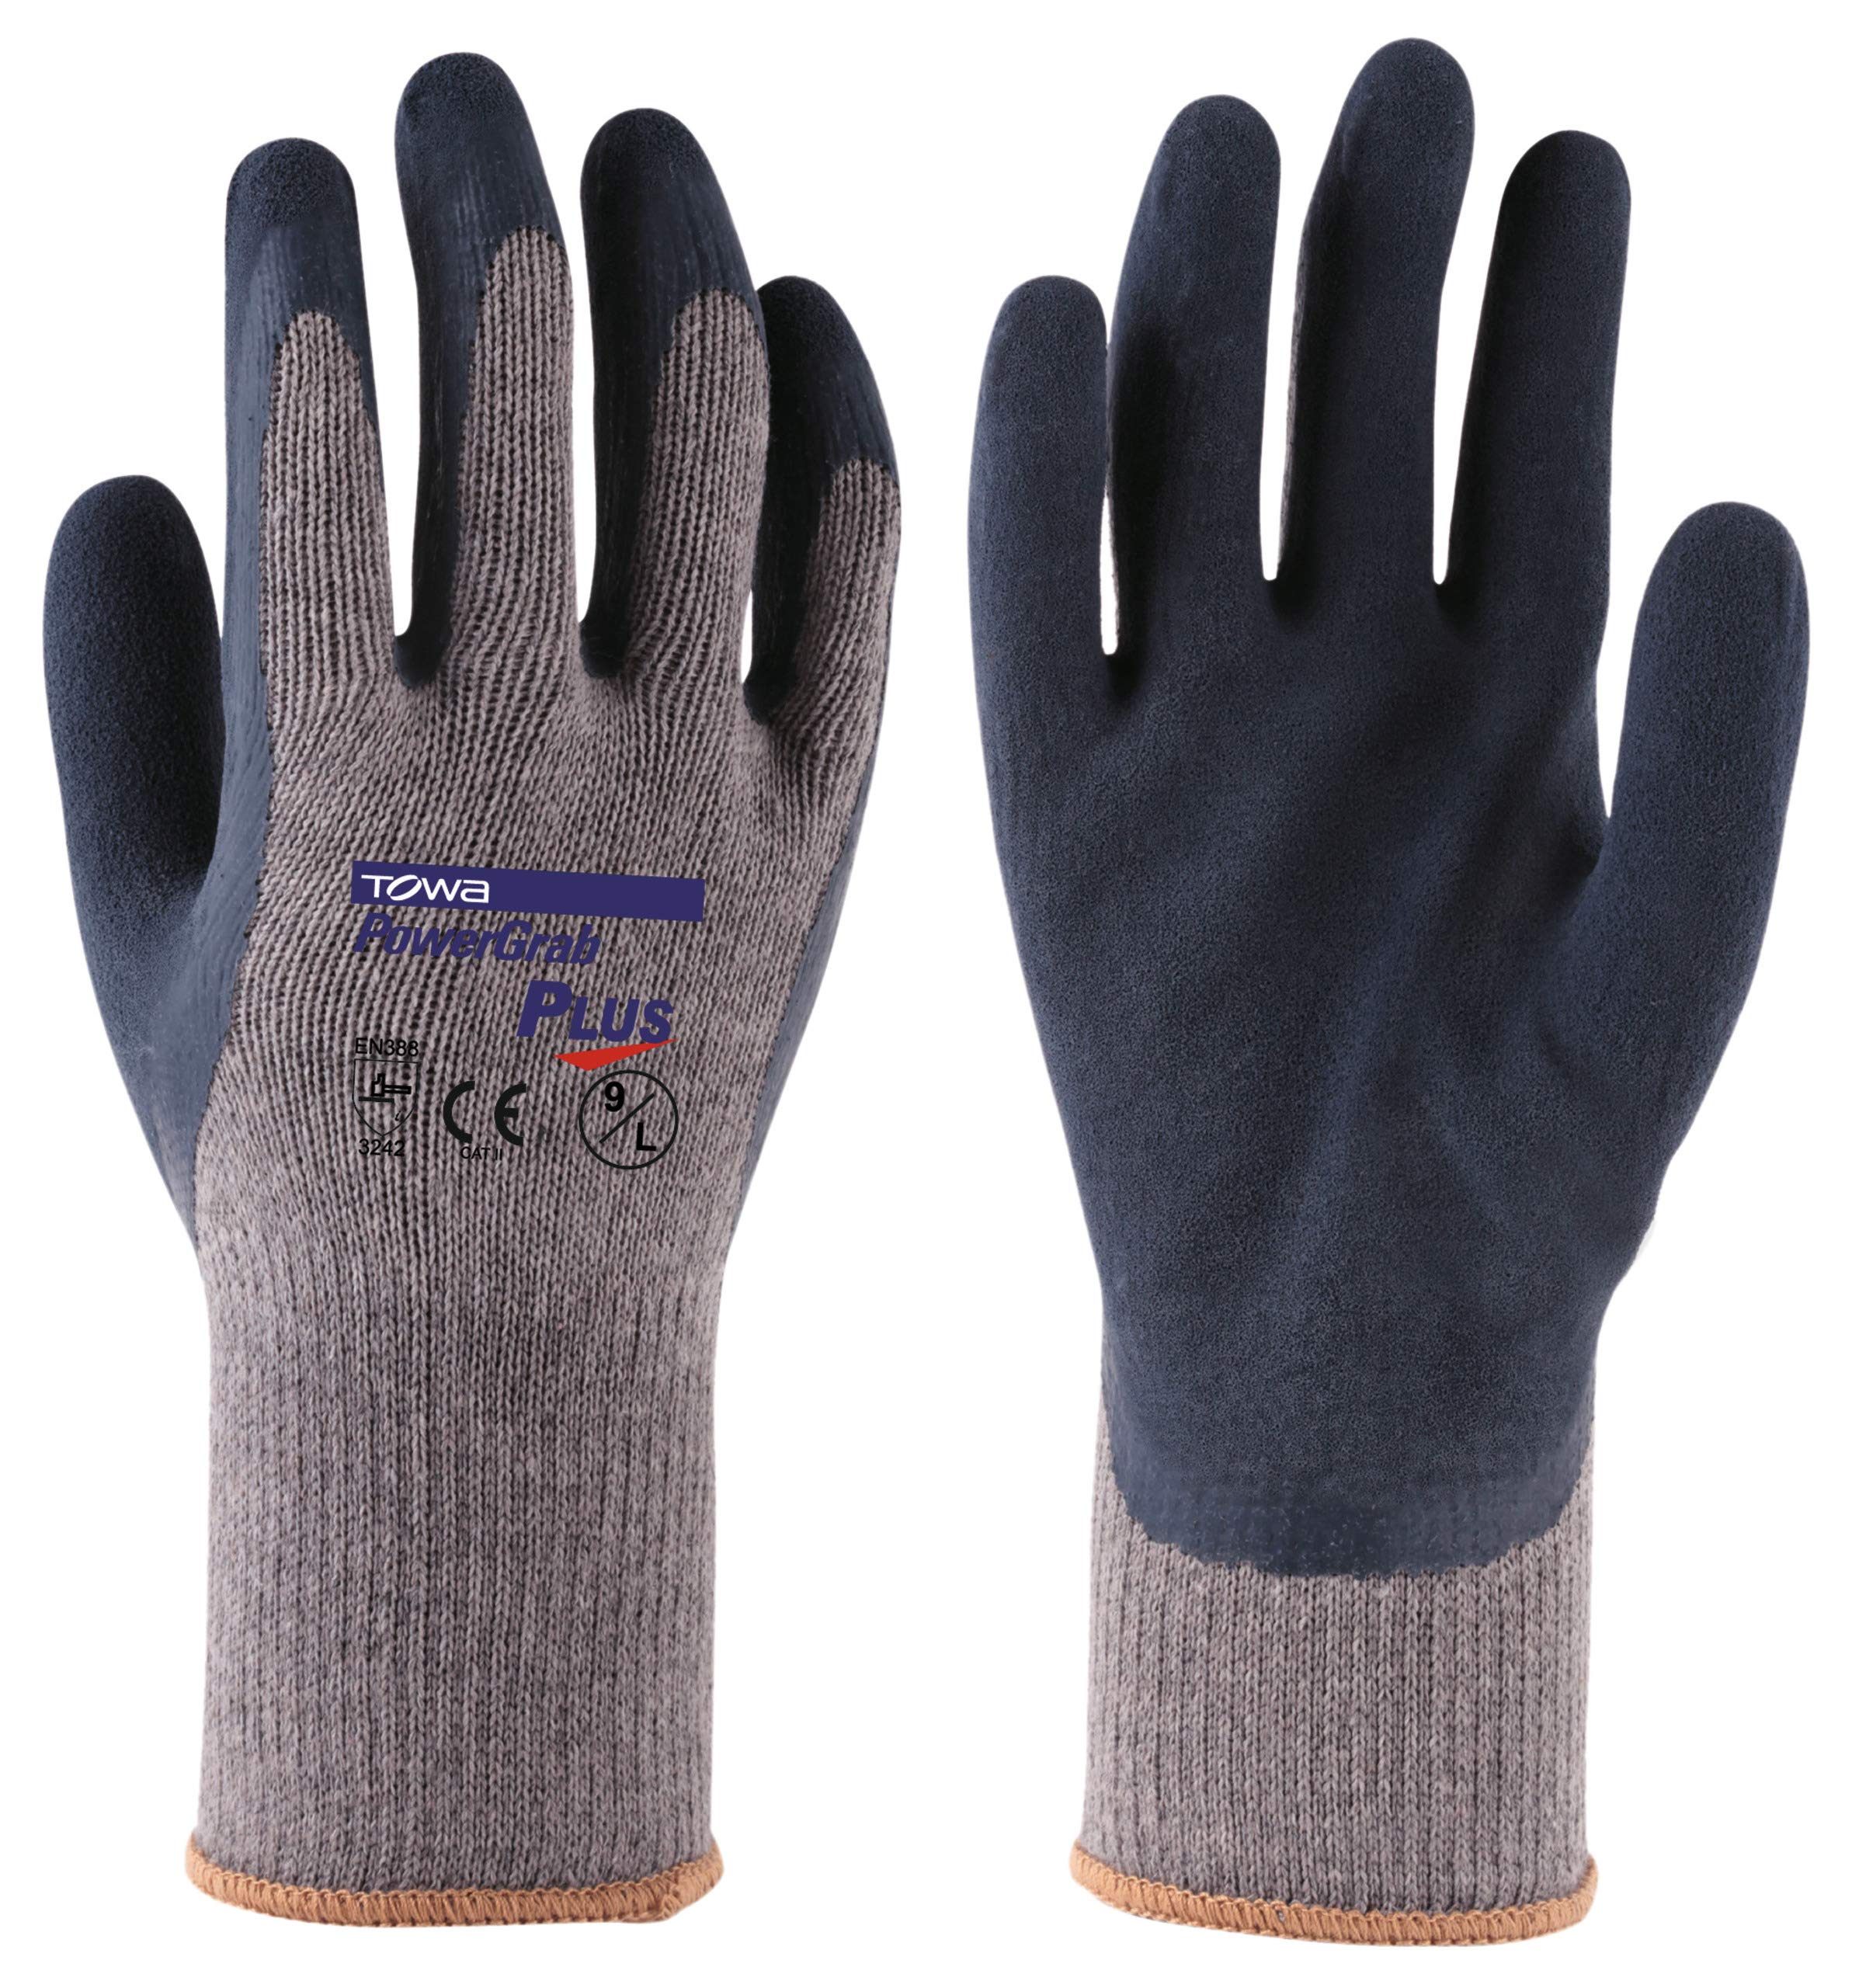 TOWA Power Grab Plus Arbeitshandschuhe Handschuhe Montagehandschuhe 12 Paar im Pack (8)